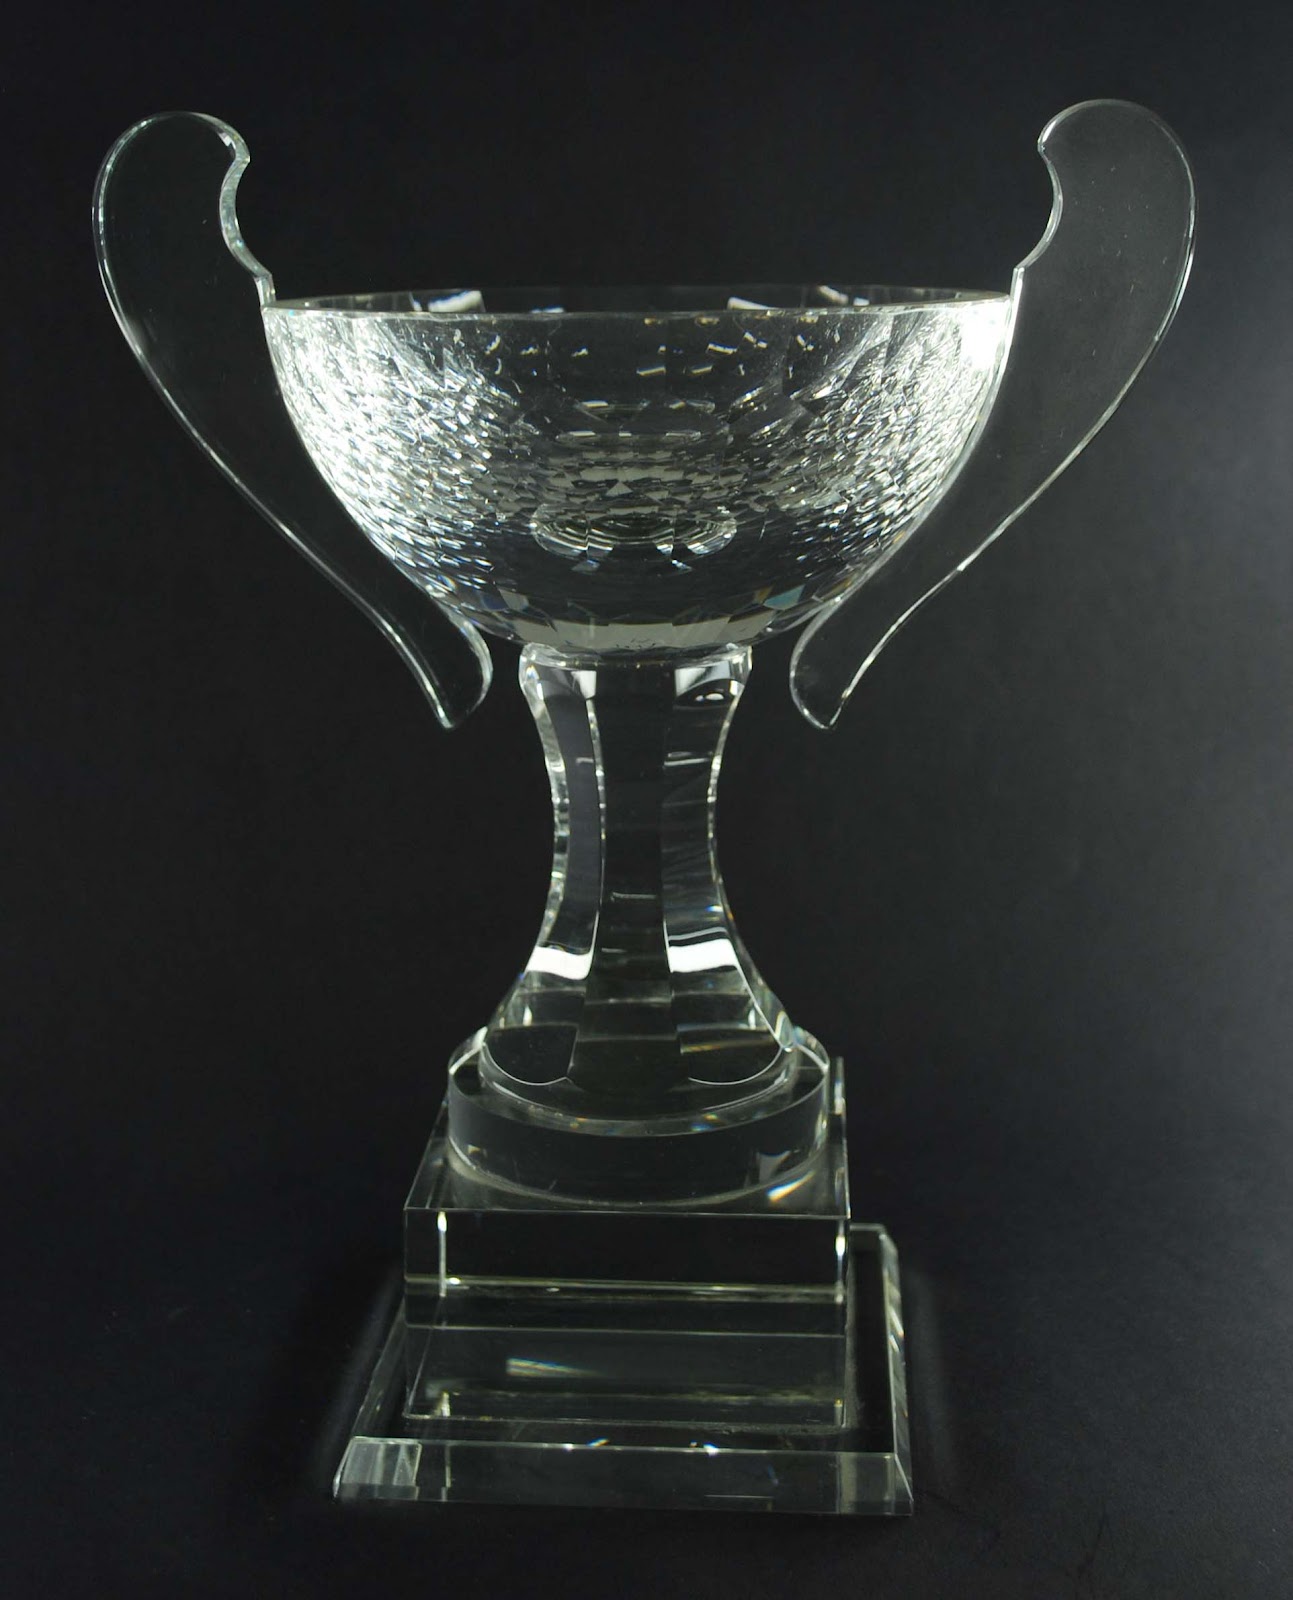 Malaysia Trophy: Crystal Trophy Cup